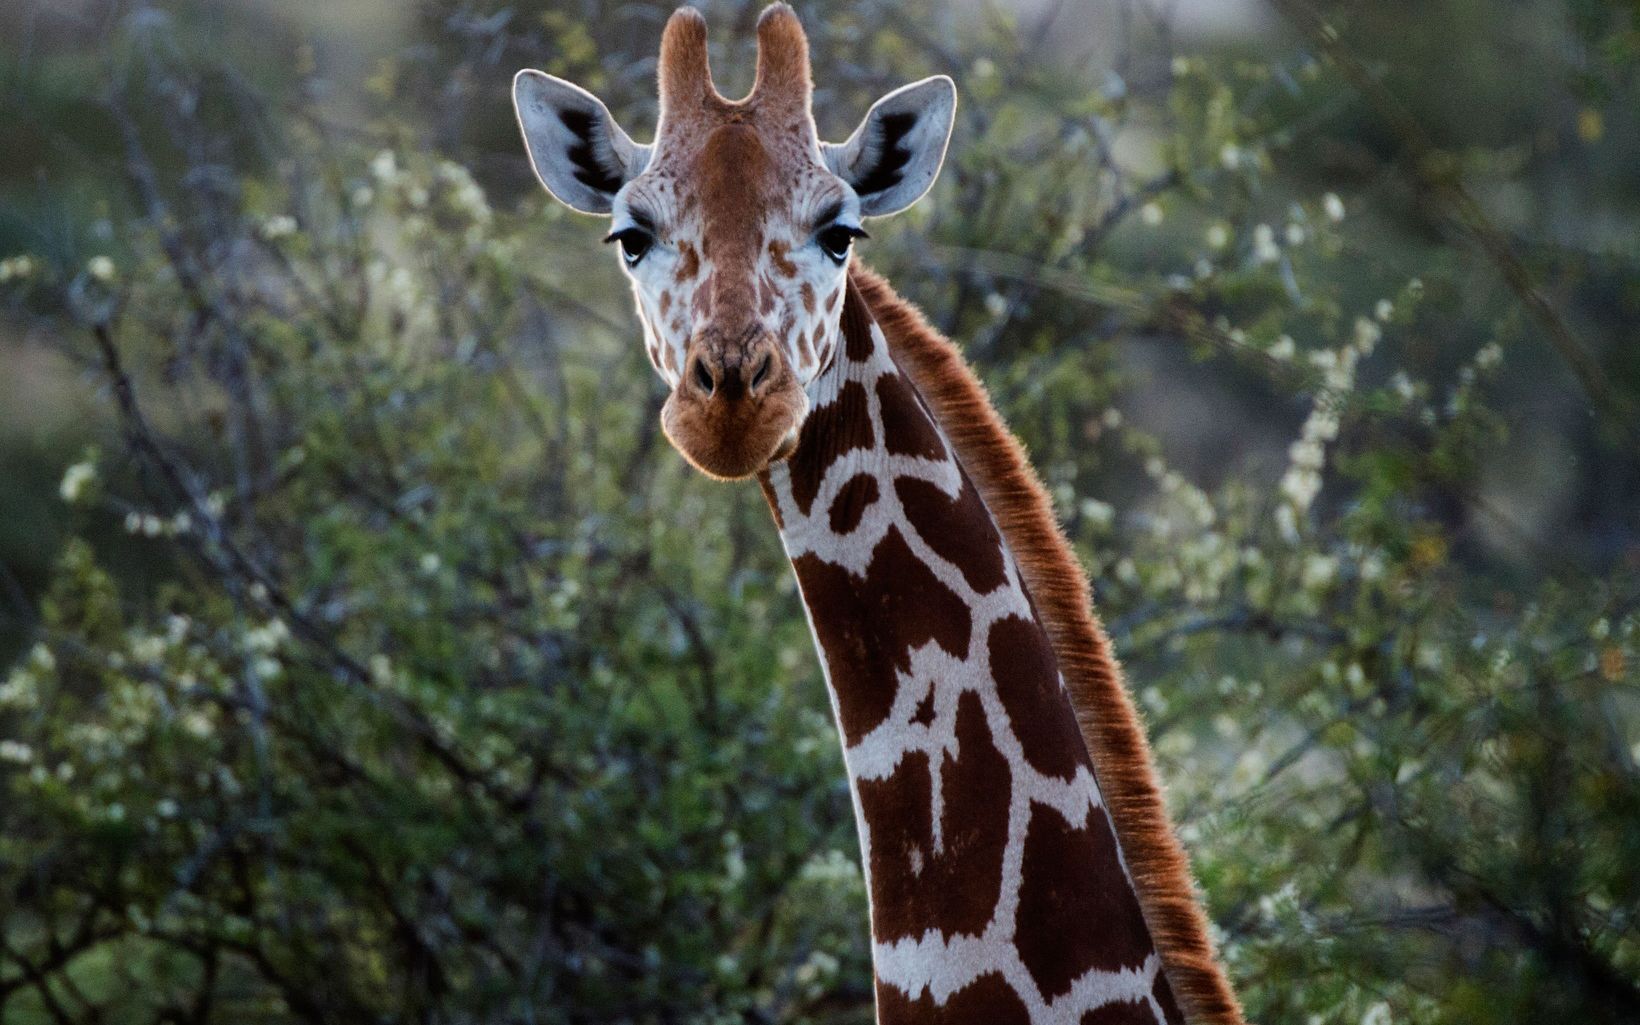 Reticulated giraffe in Loisaba Wildlife conservancy